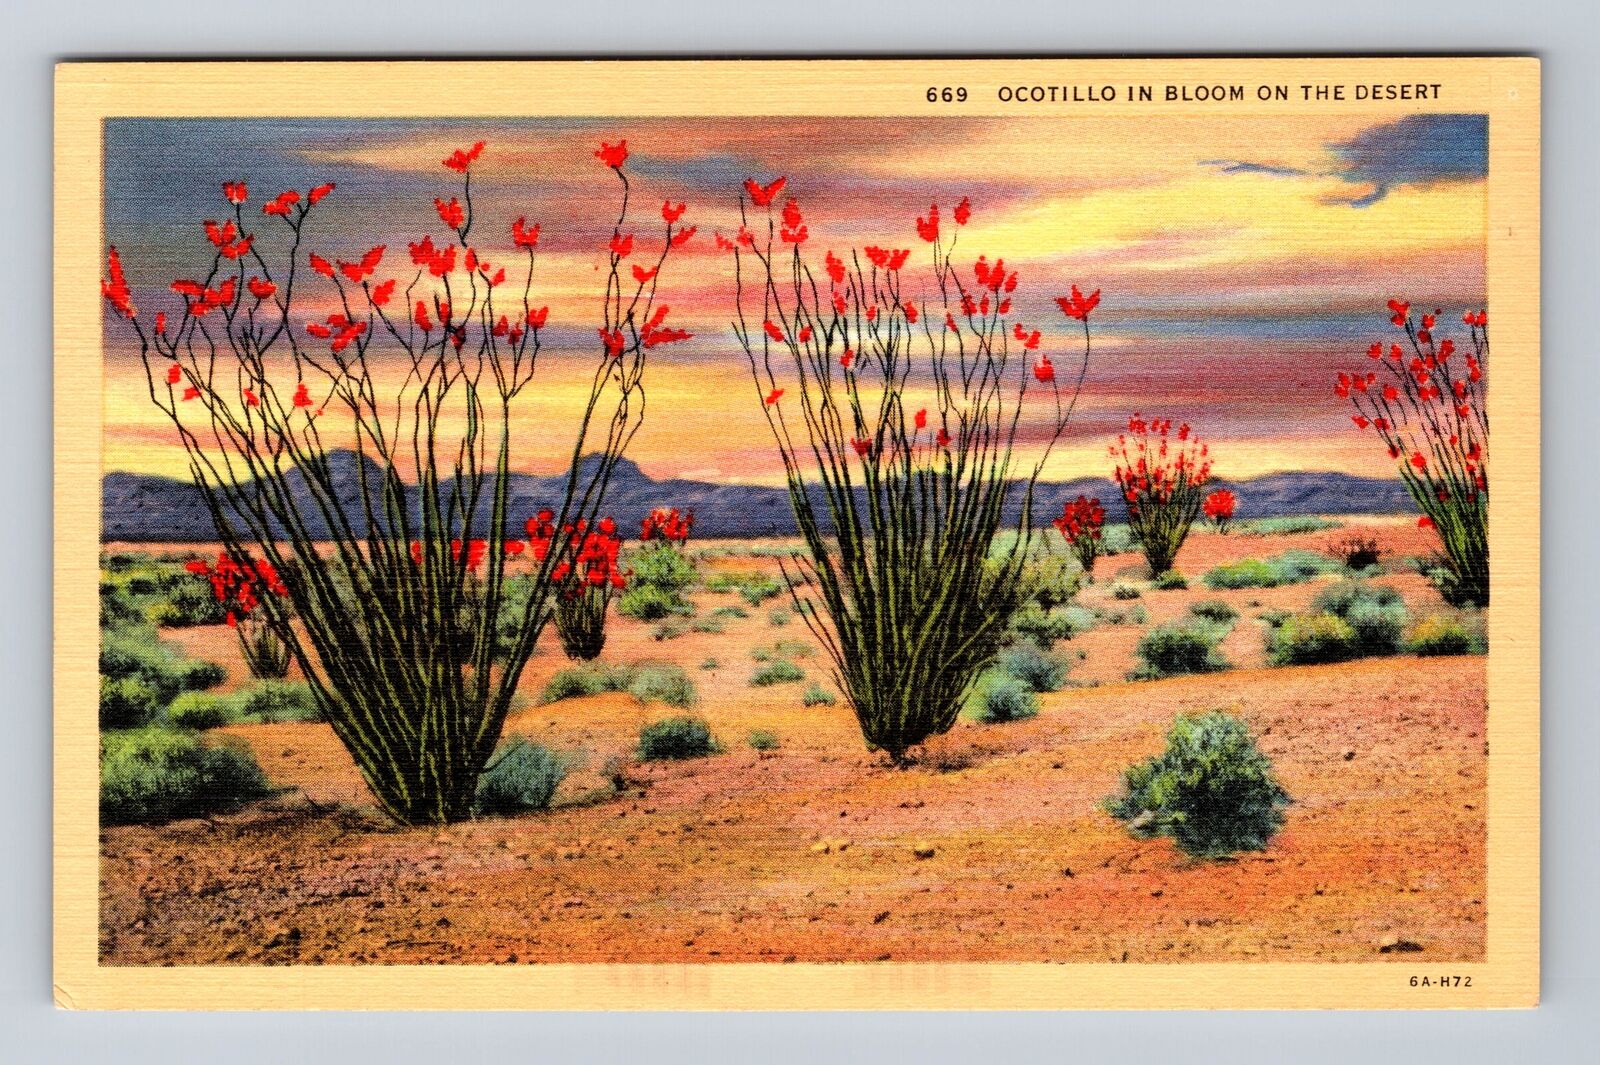 Ocotillo in Bloom on the Desert, Plants, Antique Souvenir Vintage Postcard